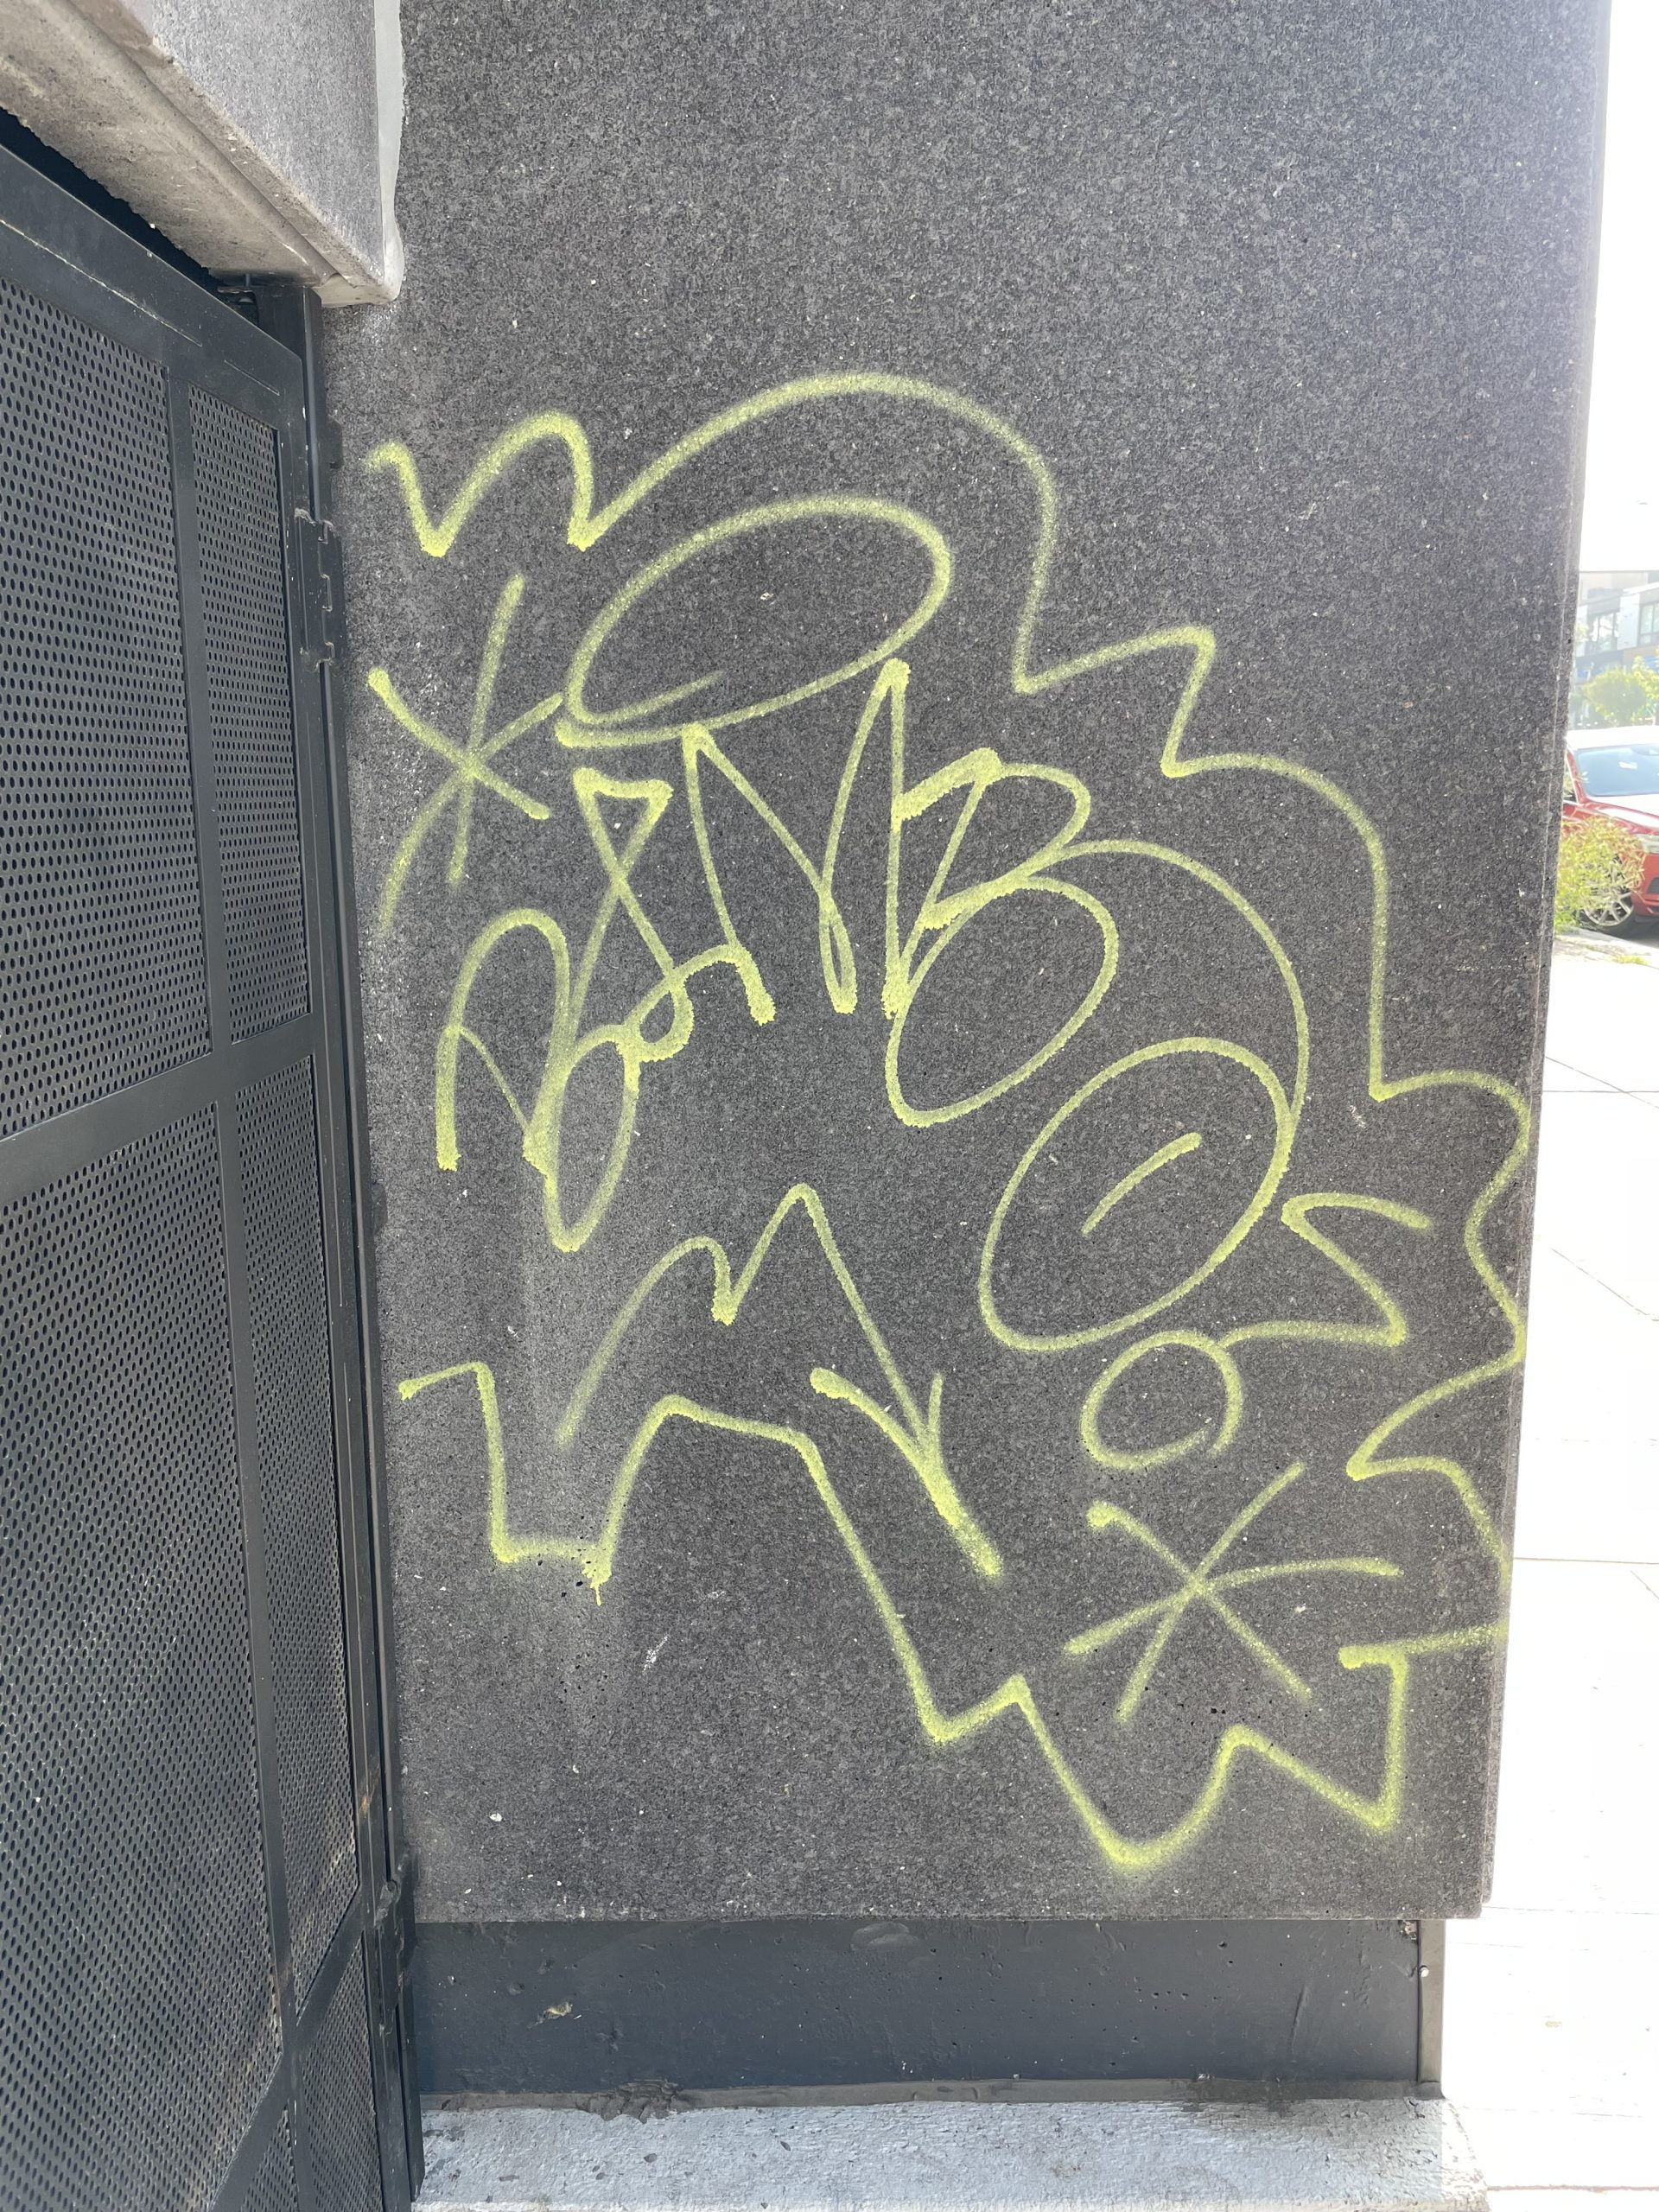 Graffiti Removal - Before